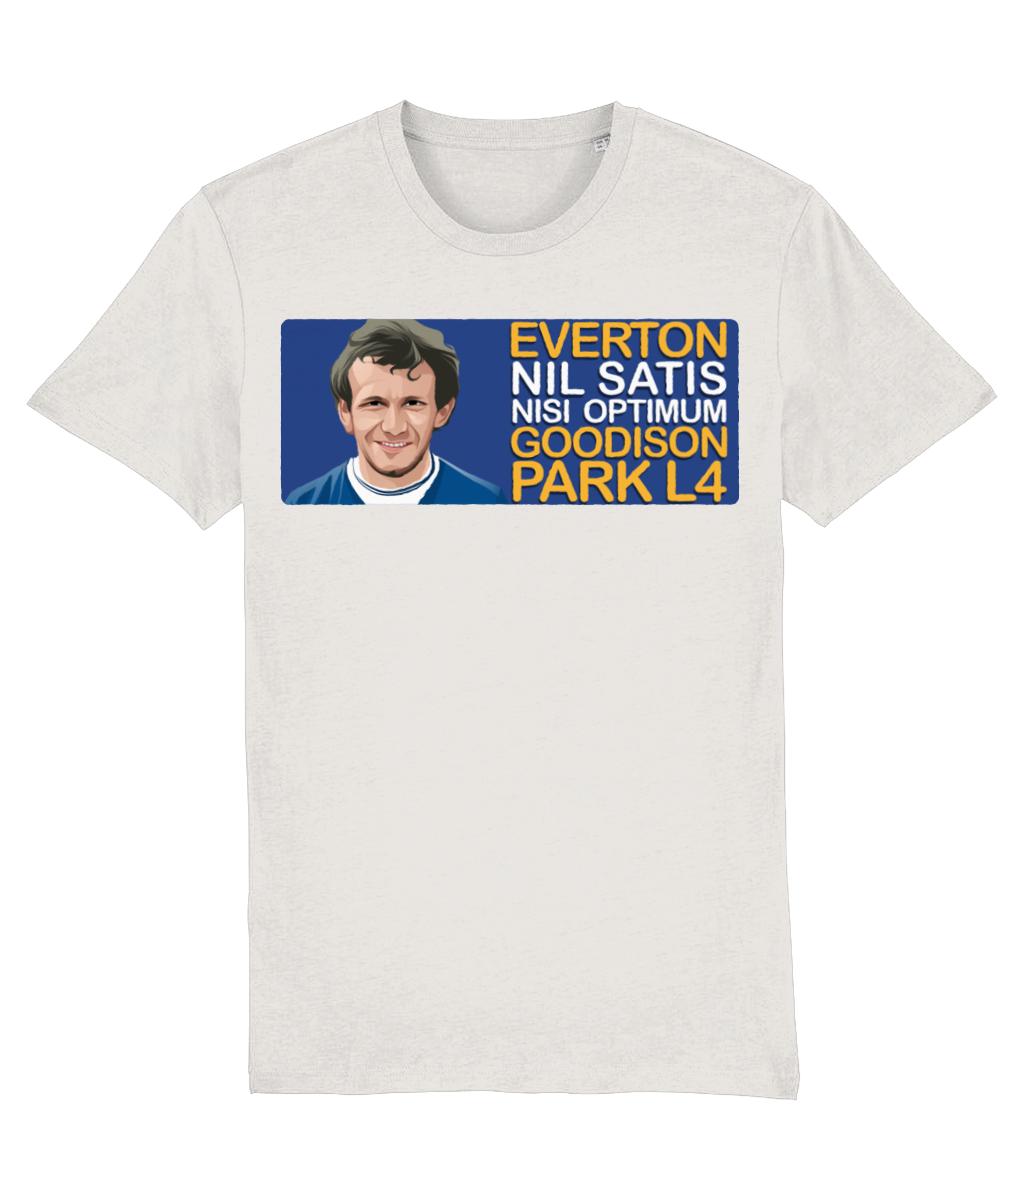 Everton Peter Reid Goodison Park L4 Unisex T-Shirt Stanley/Stella Retrotext Vintage White XX-Small 